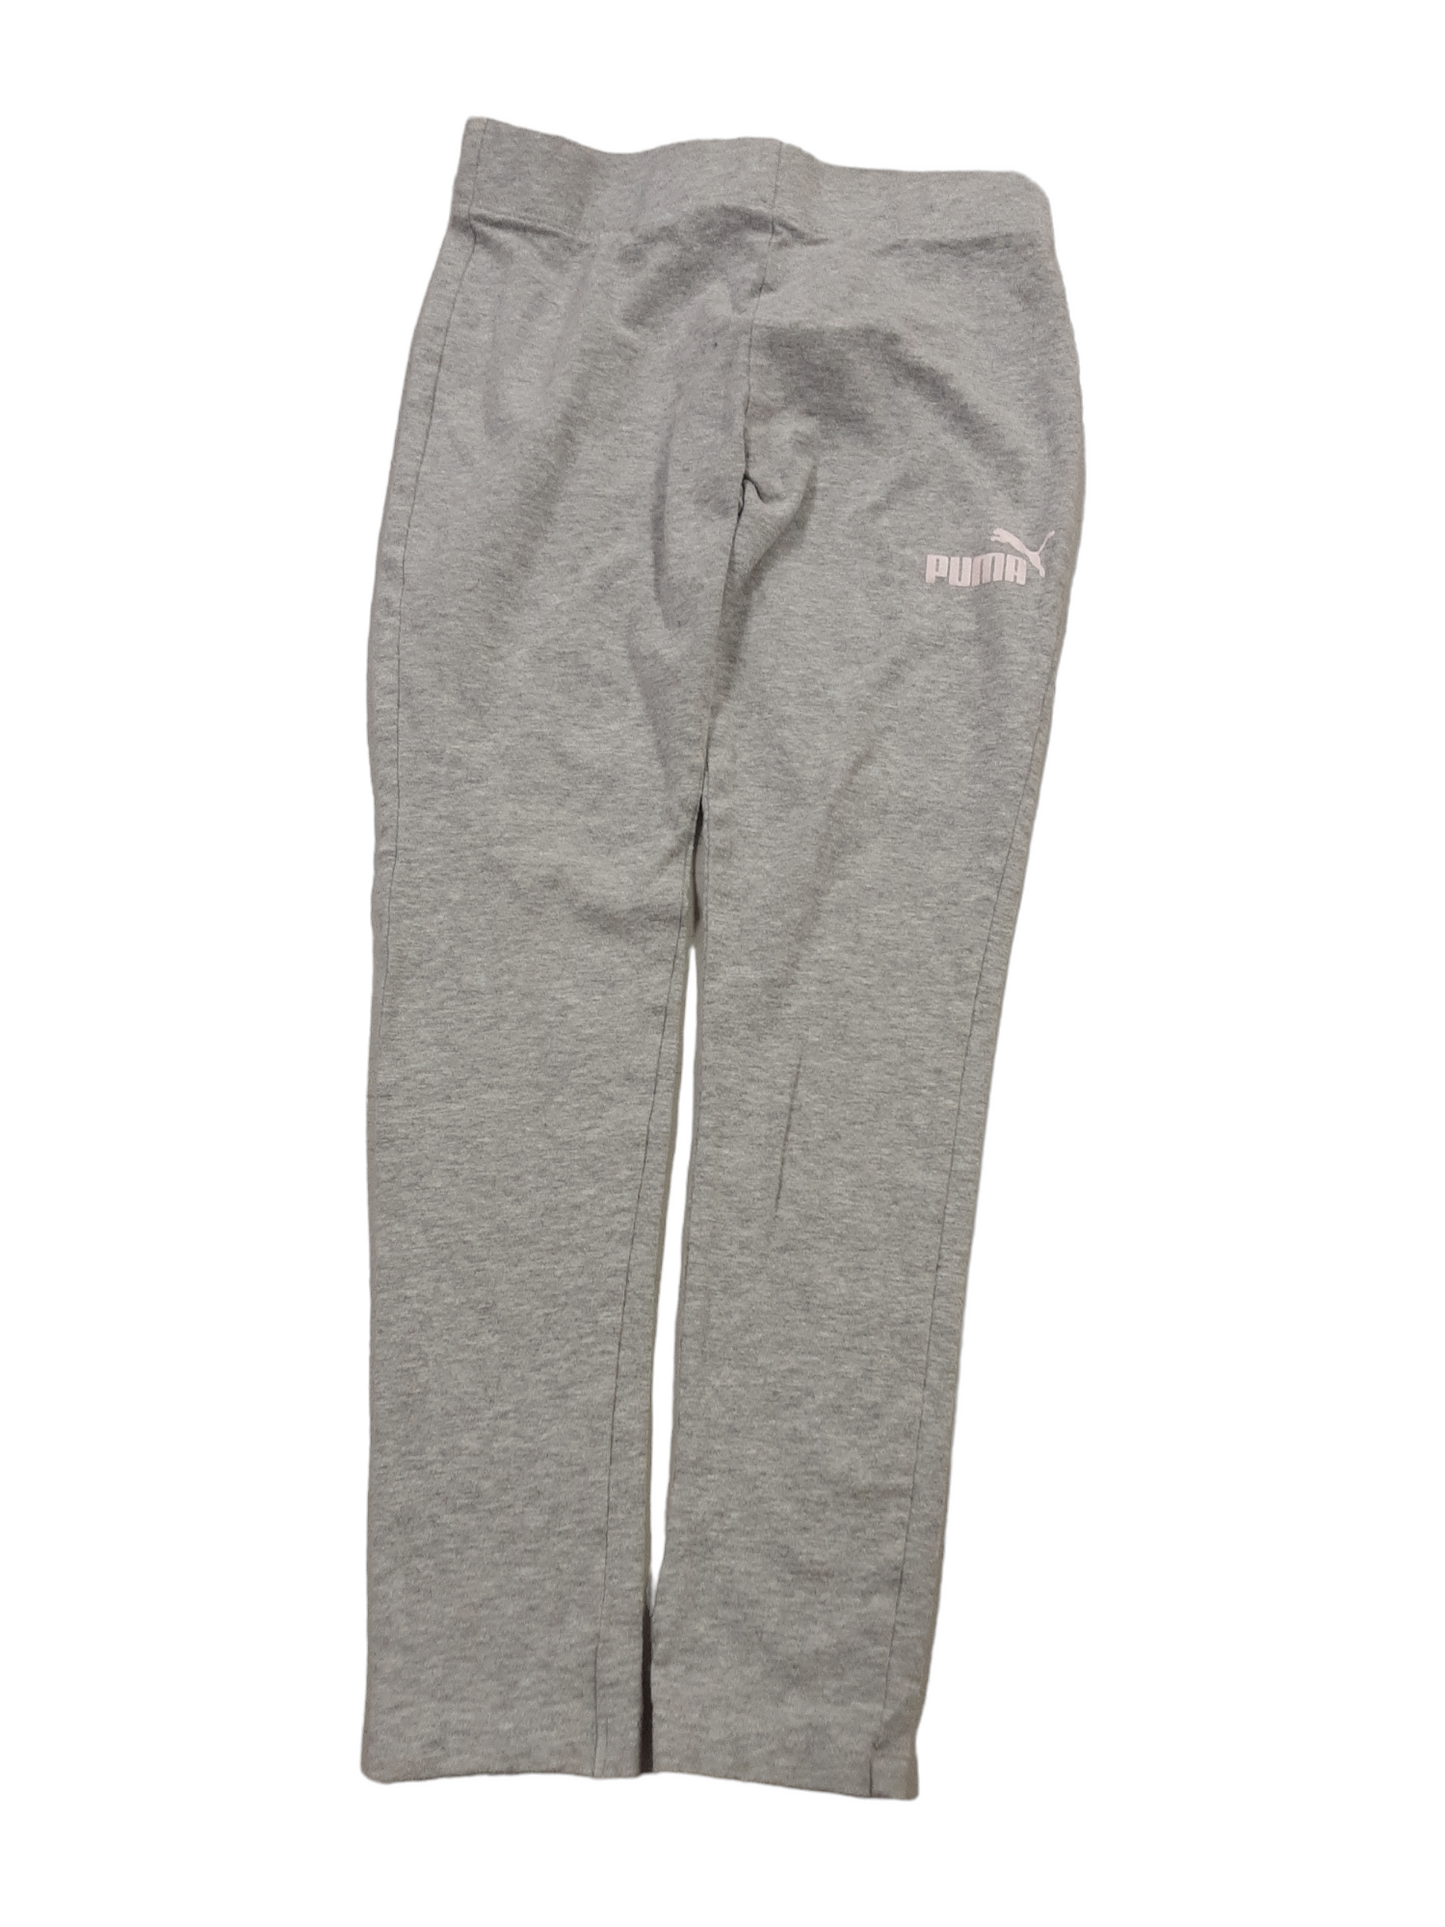 Grey legging size 8